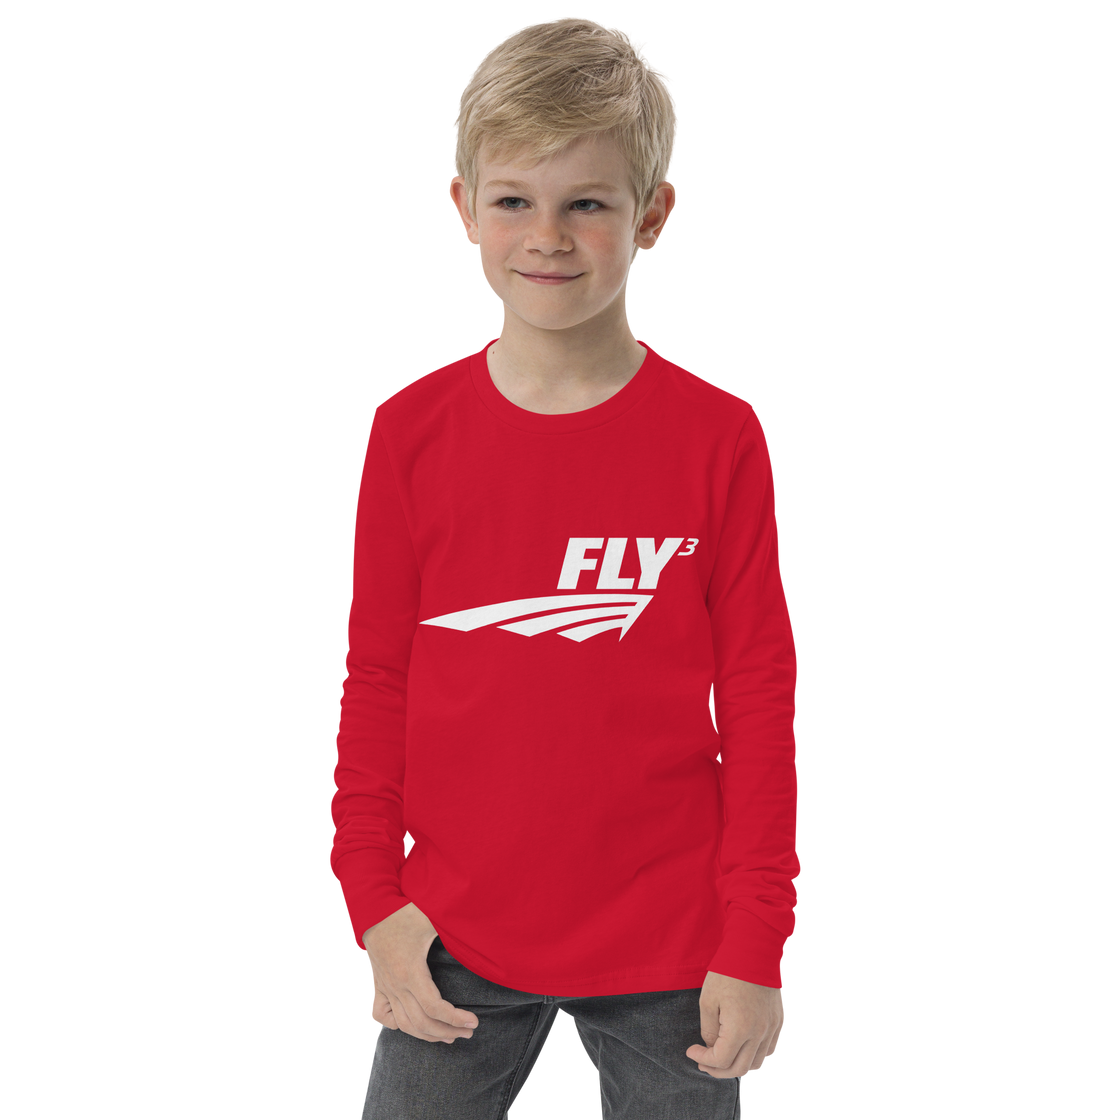 FLY³ Youth long sleeve tee | Flycube